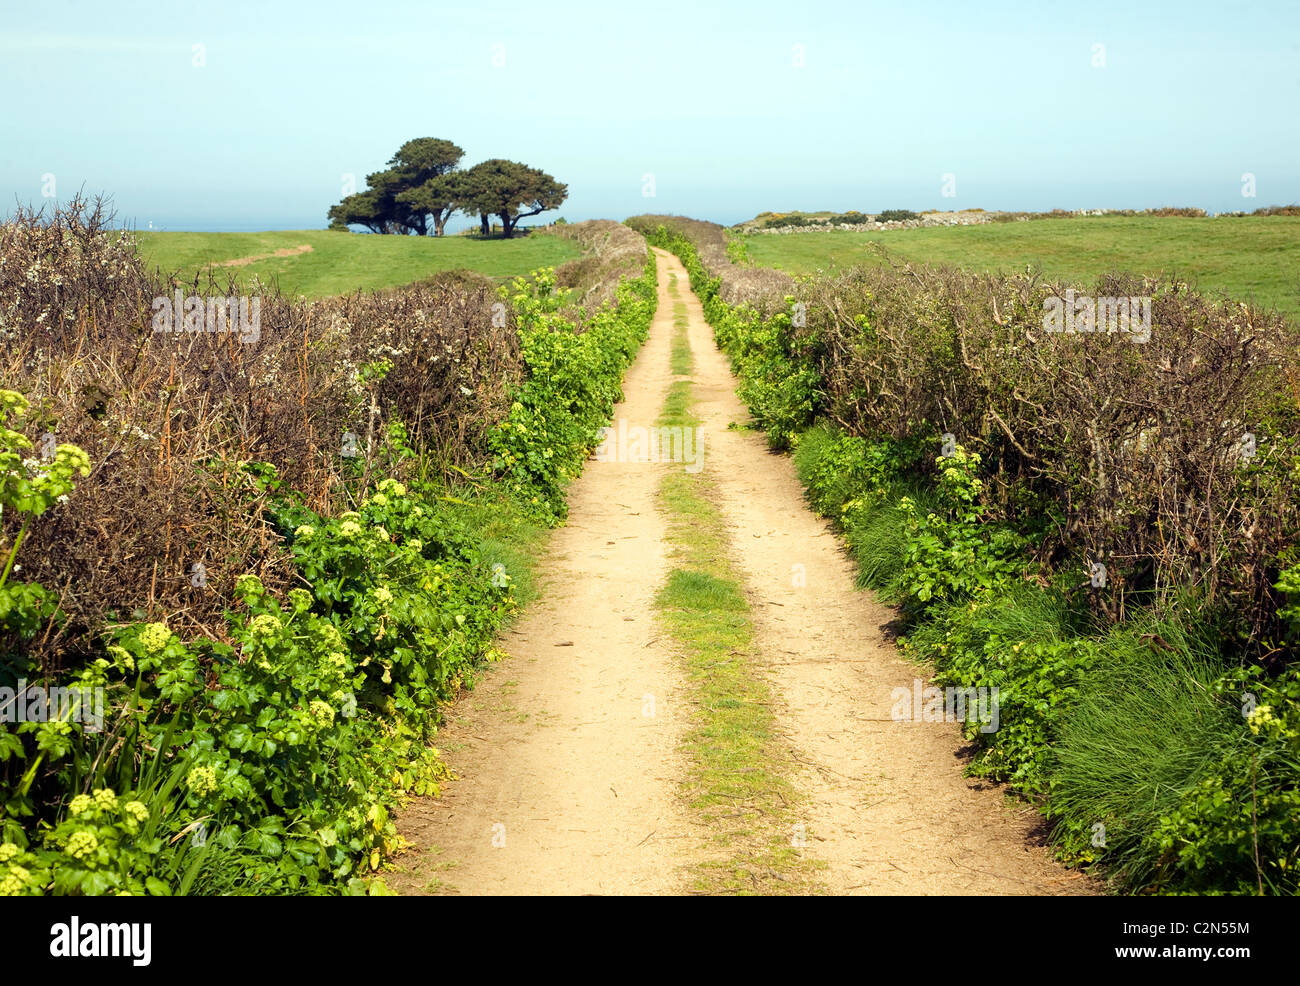 Sandy lane hedgerows tree landscape Herm island, Channel Islands Stock Photo